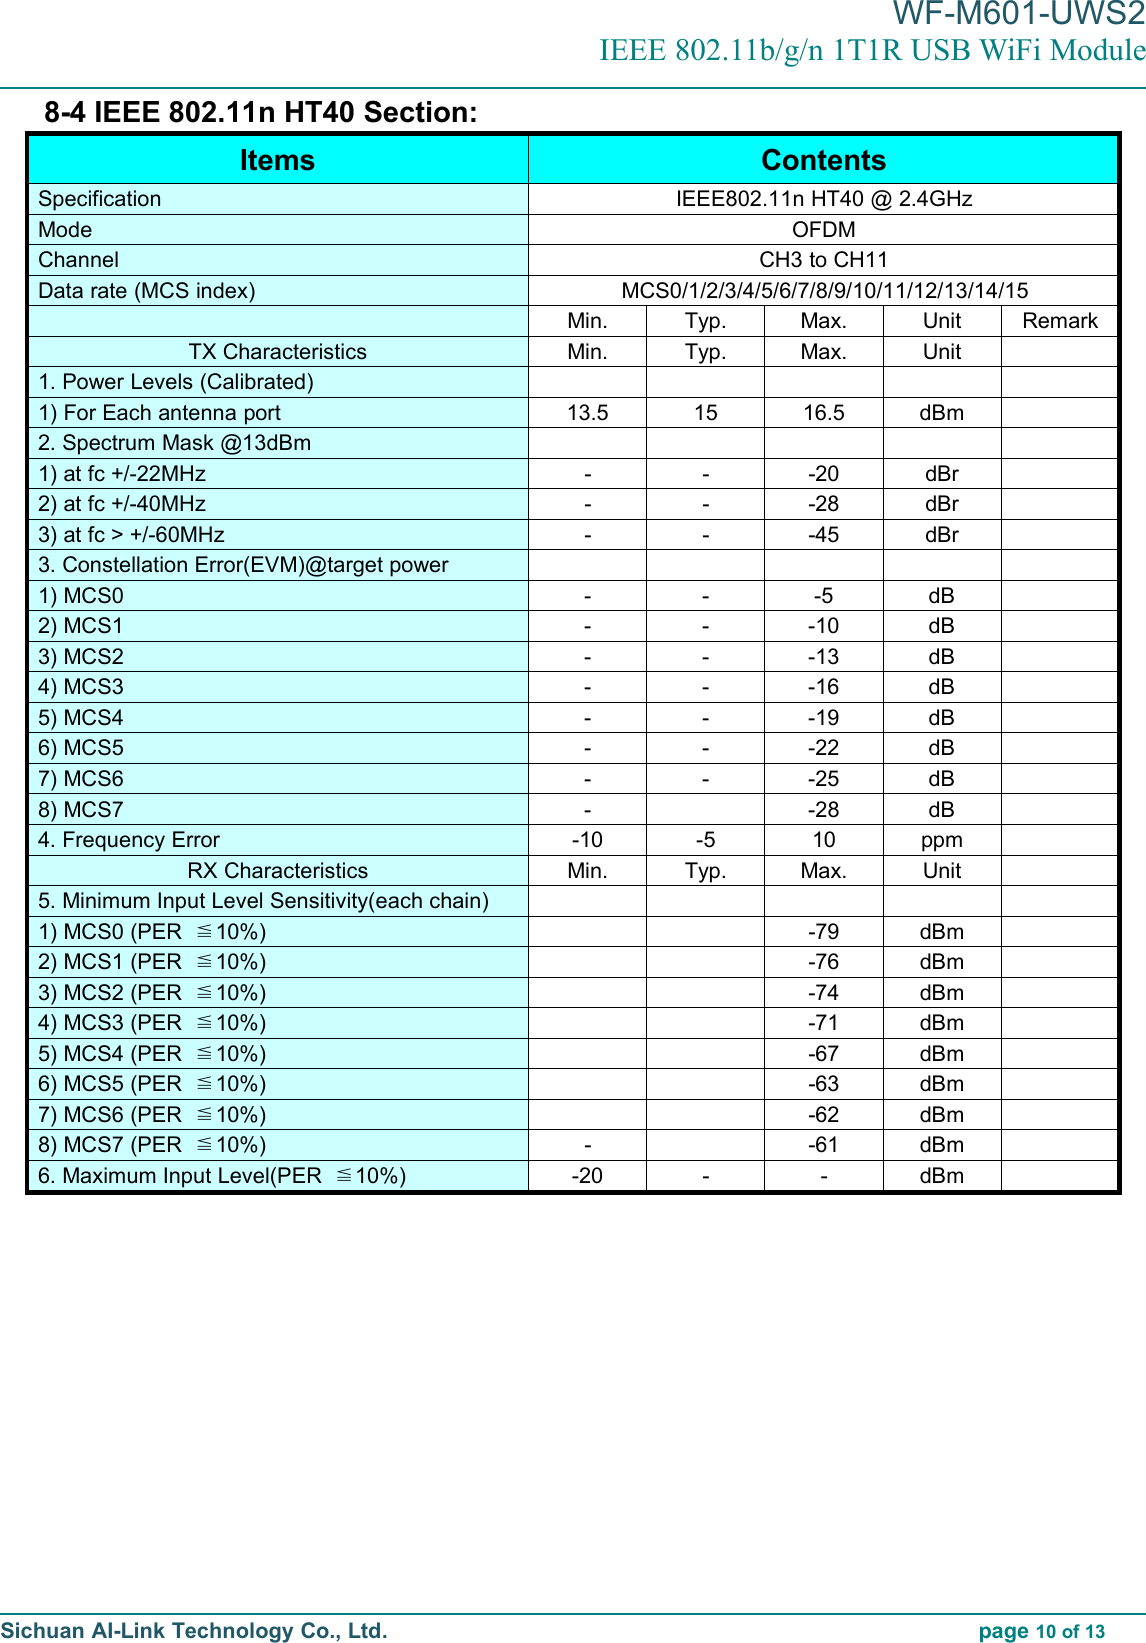 Sichuan AI Link Technology WFM601UWS2 Wireless Module User Manual